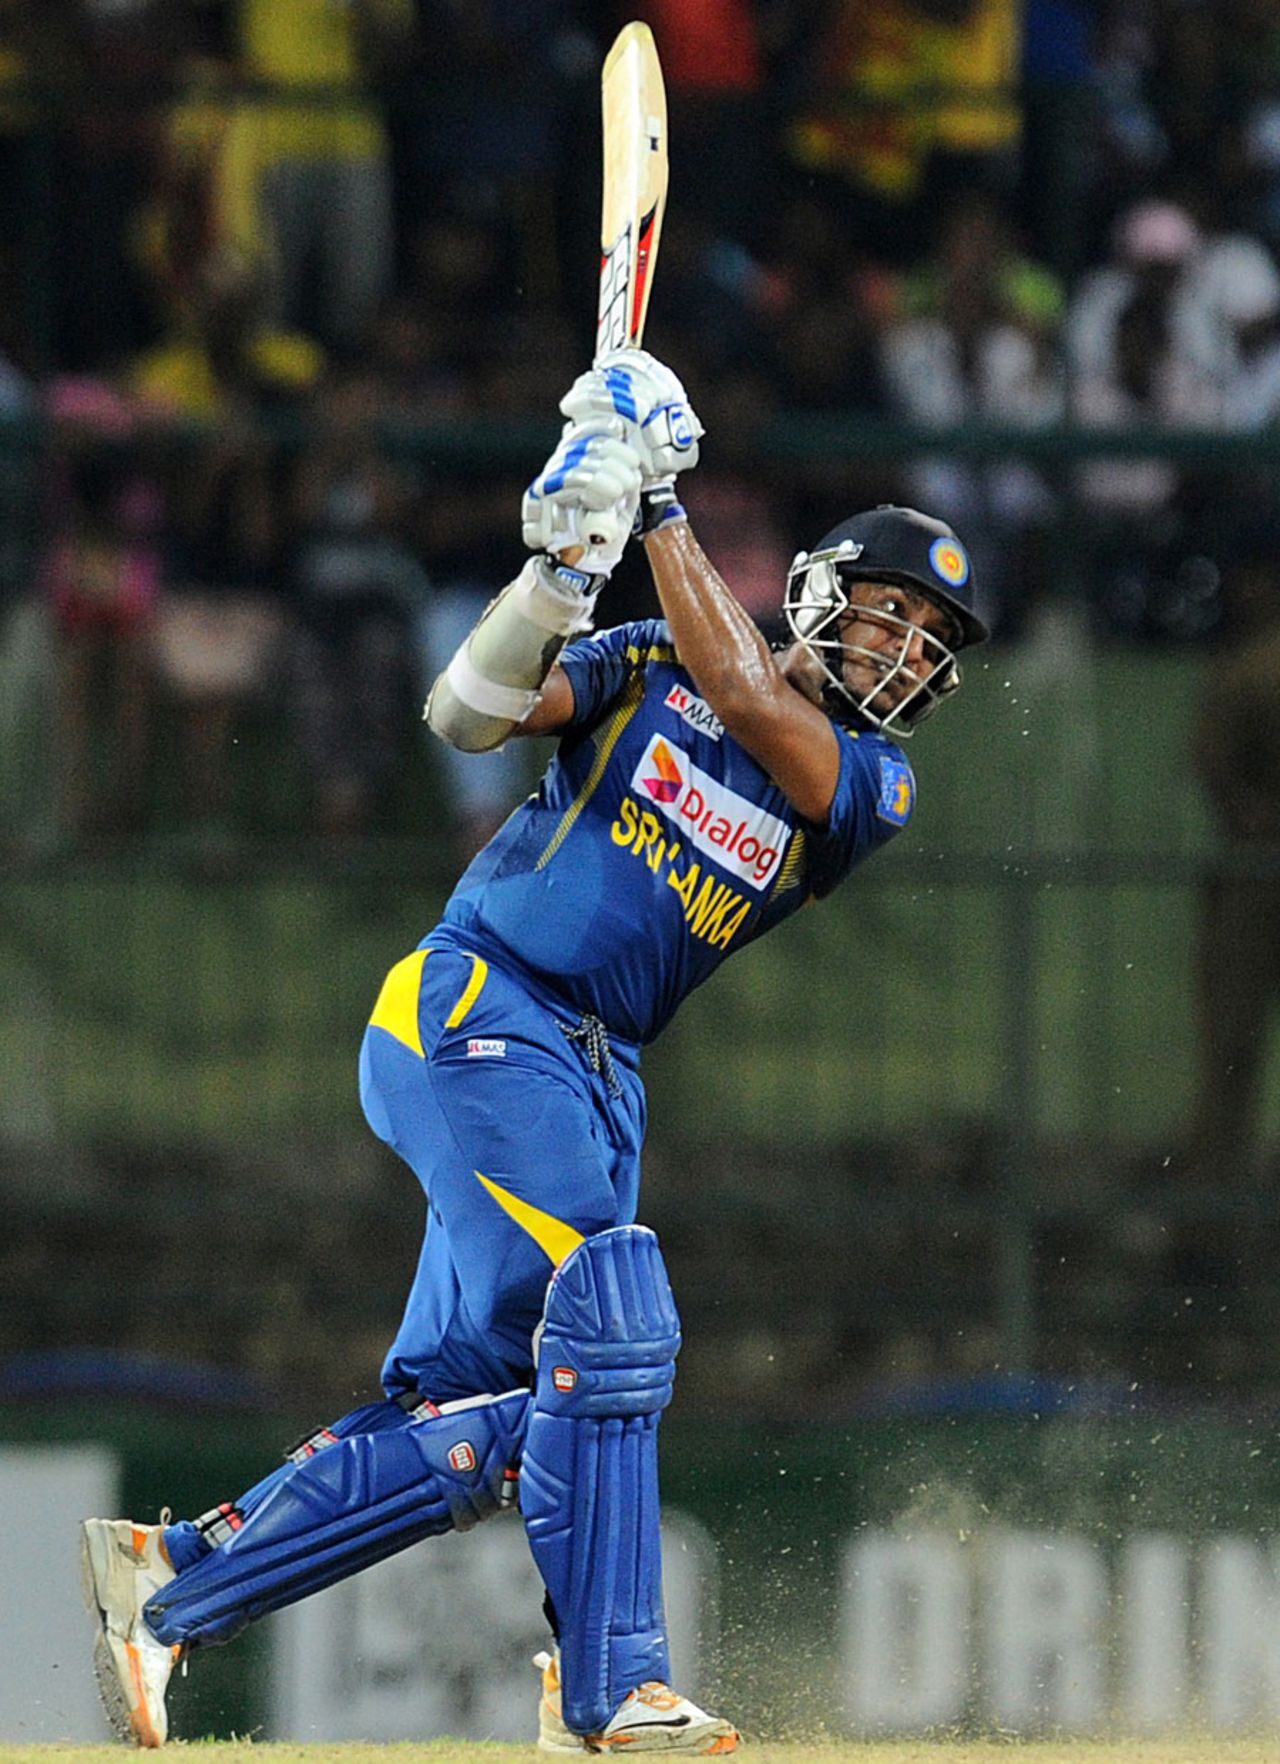 Kumar Sangakkara lofts the ball over the top, Sri Lanka v South Africa, 4th ODI, Pallekele, July 28, 2013